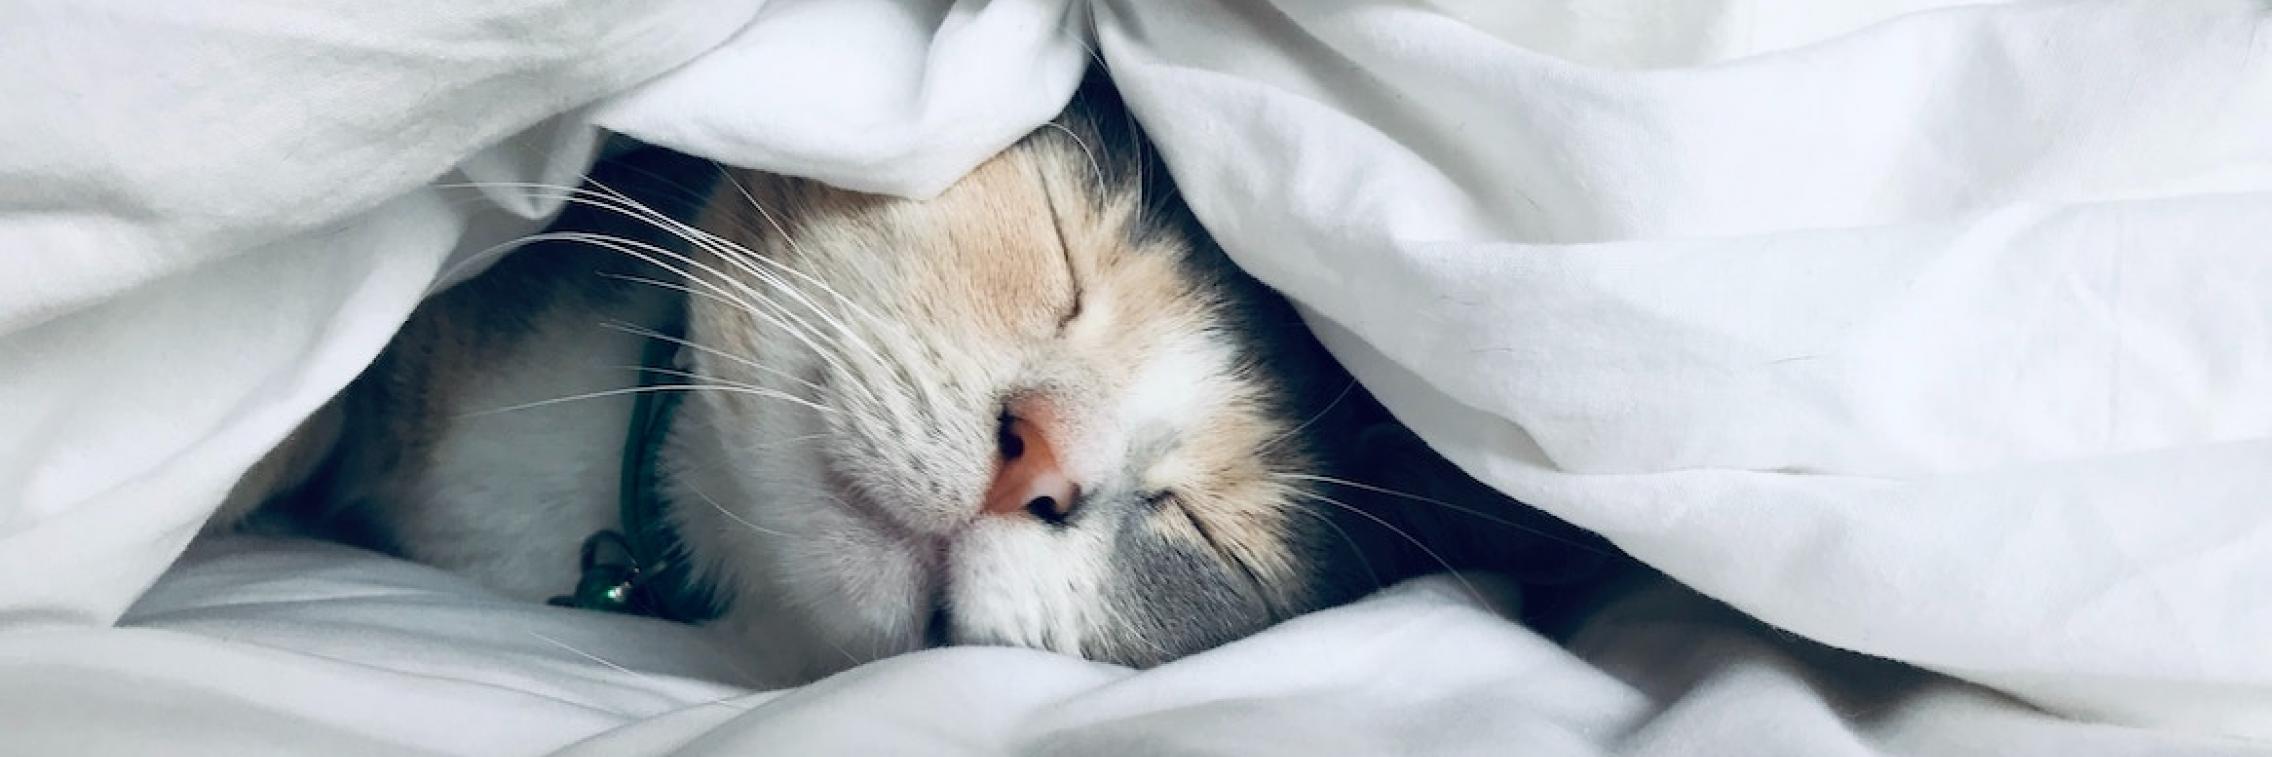 Cat sleeping under a blanket.